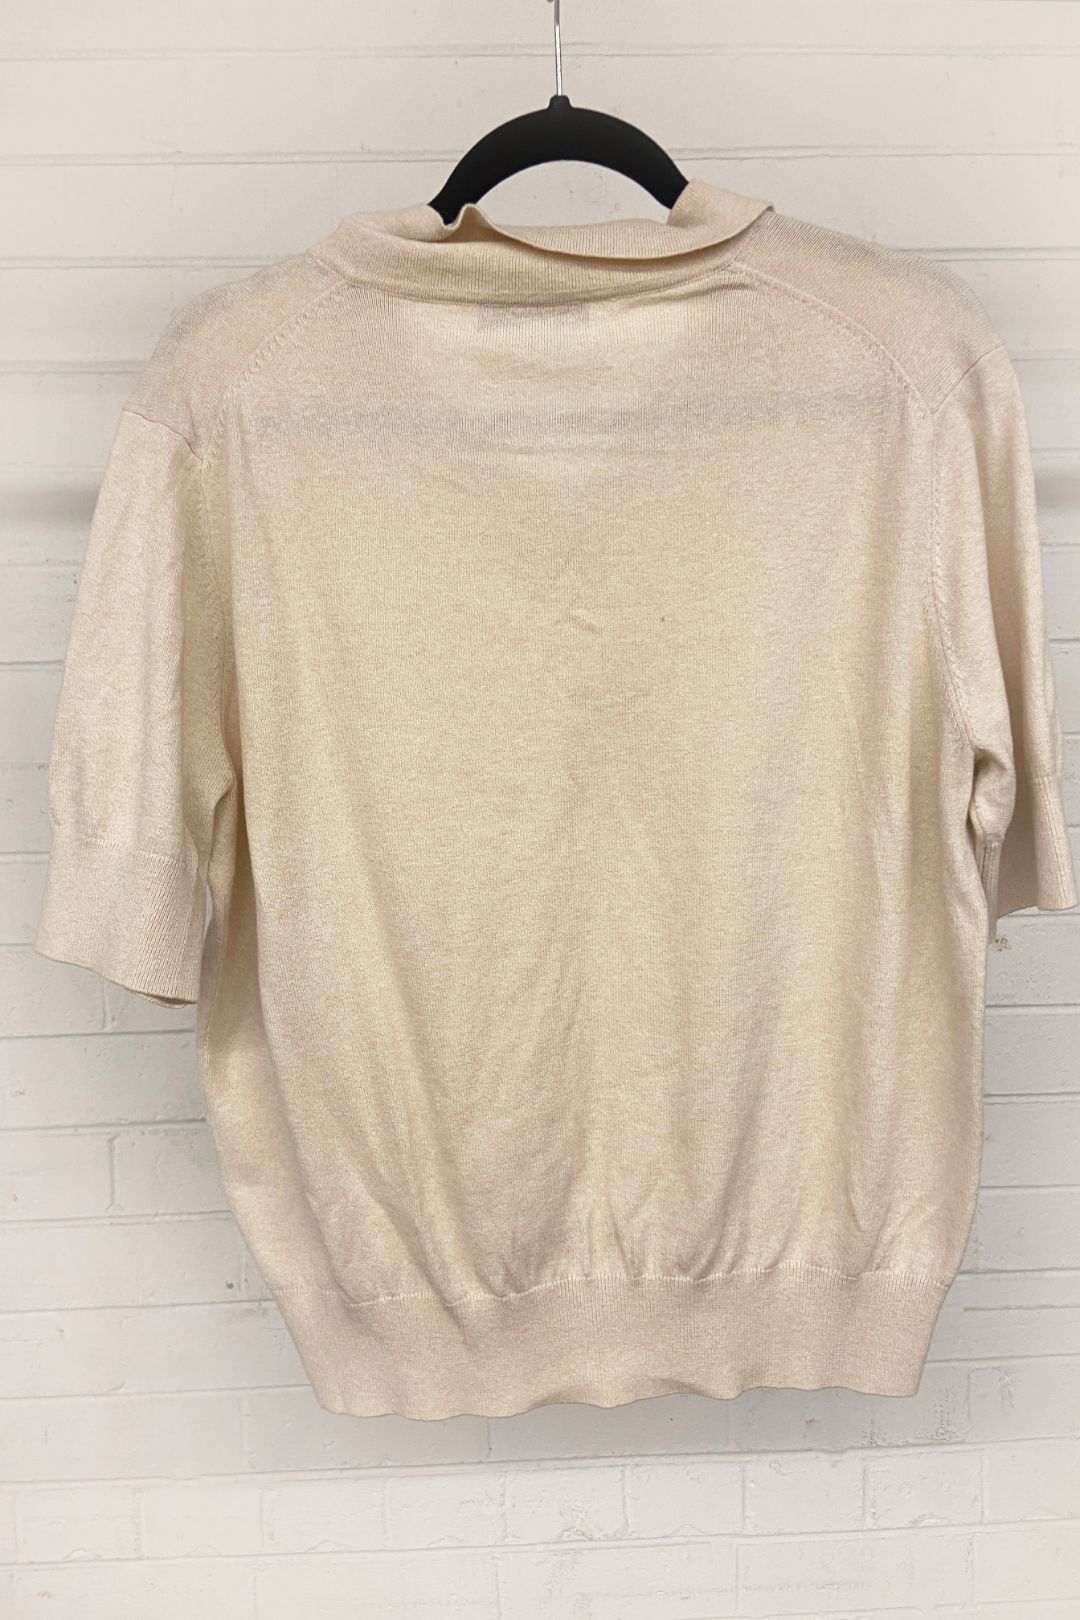 Short Sleeve Knit Shirt in Cream